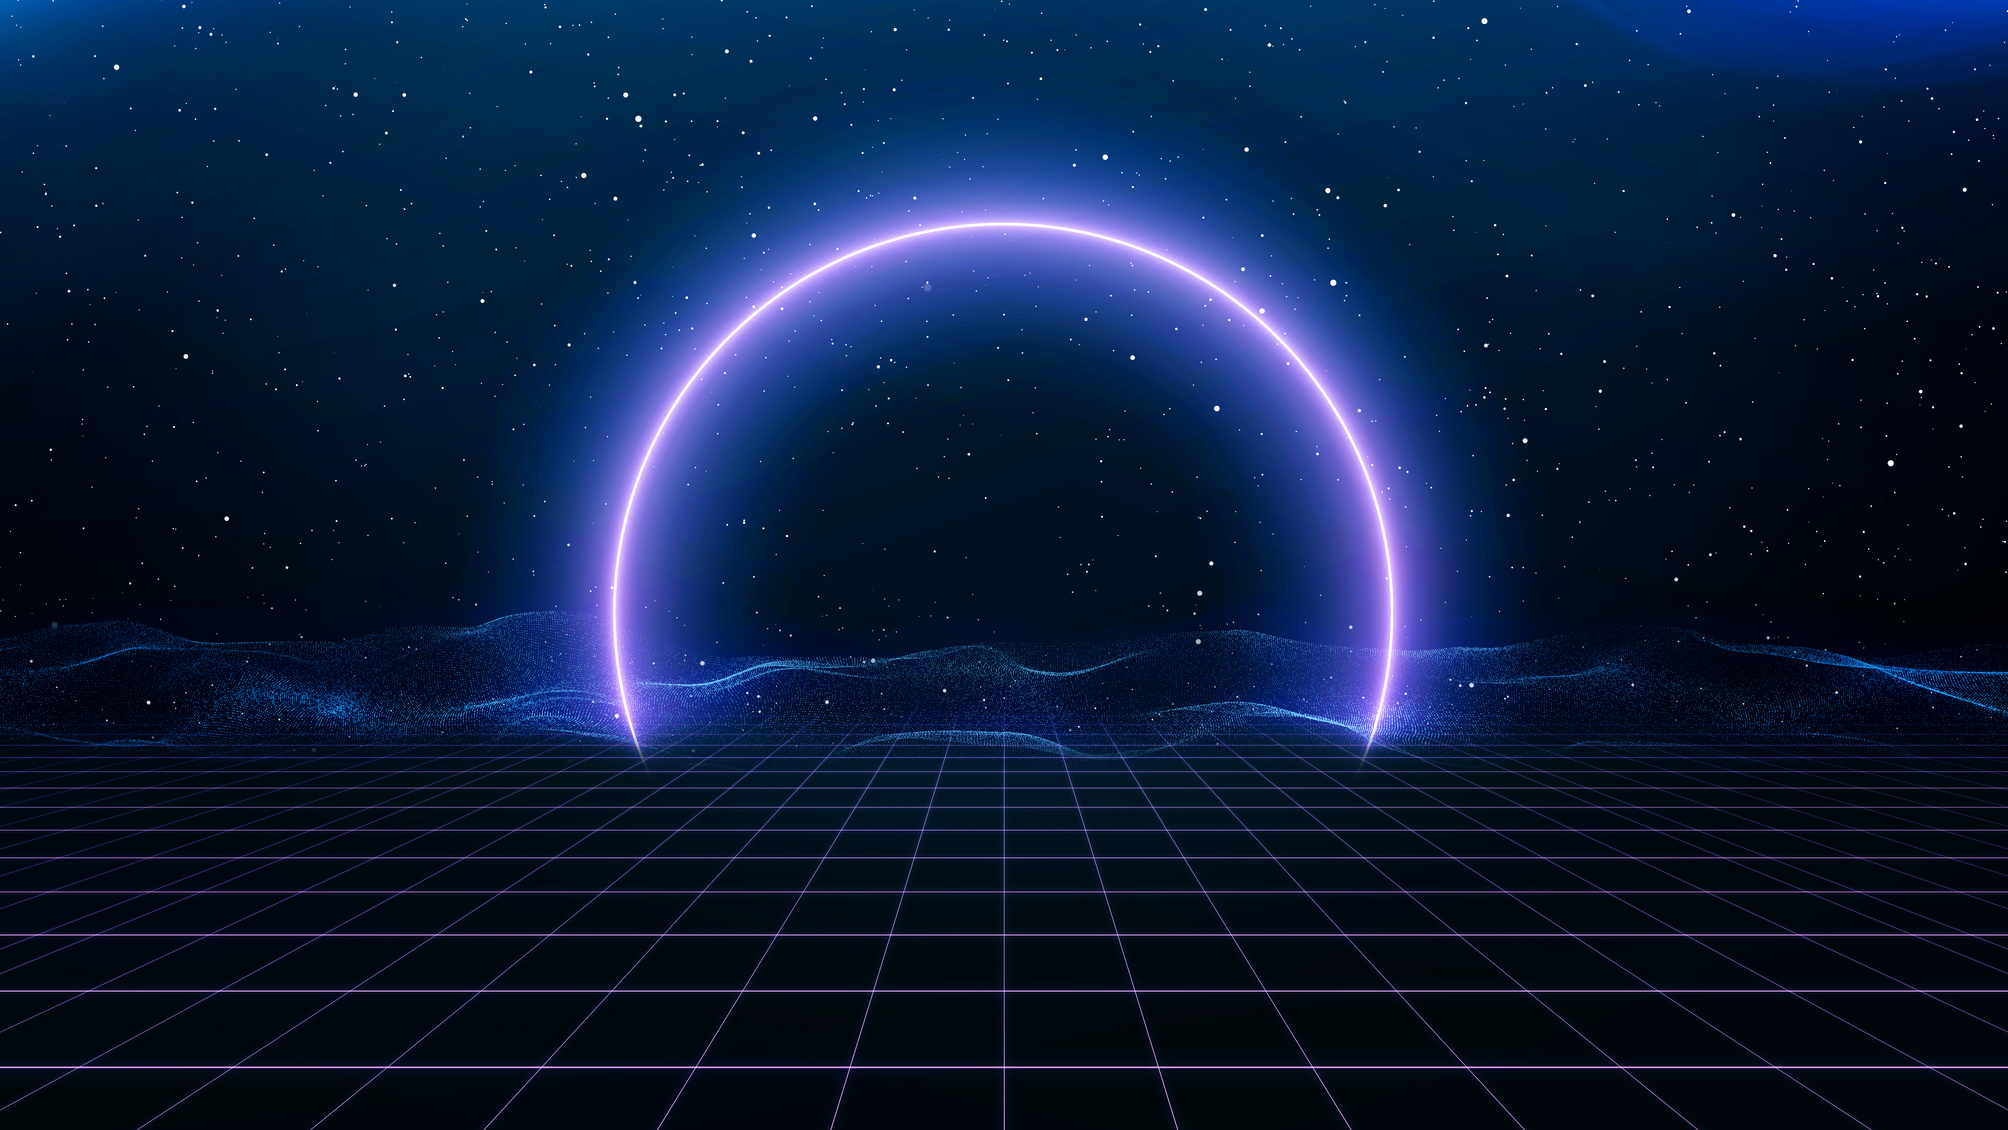 Retro Cyberpunk Style 80S Sci-Fi Background Futuristic with Laser Grid 